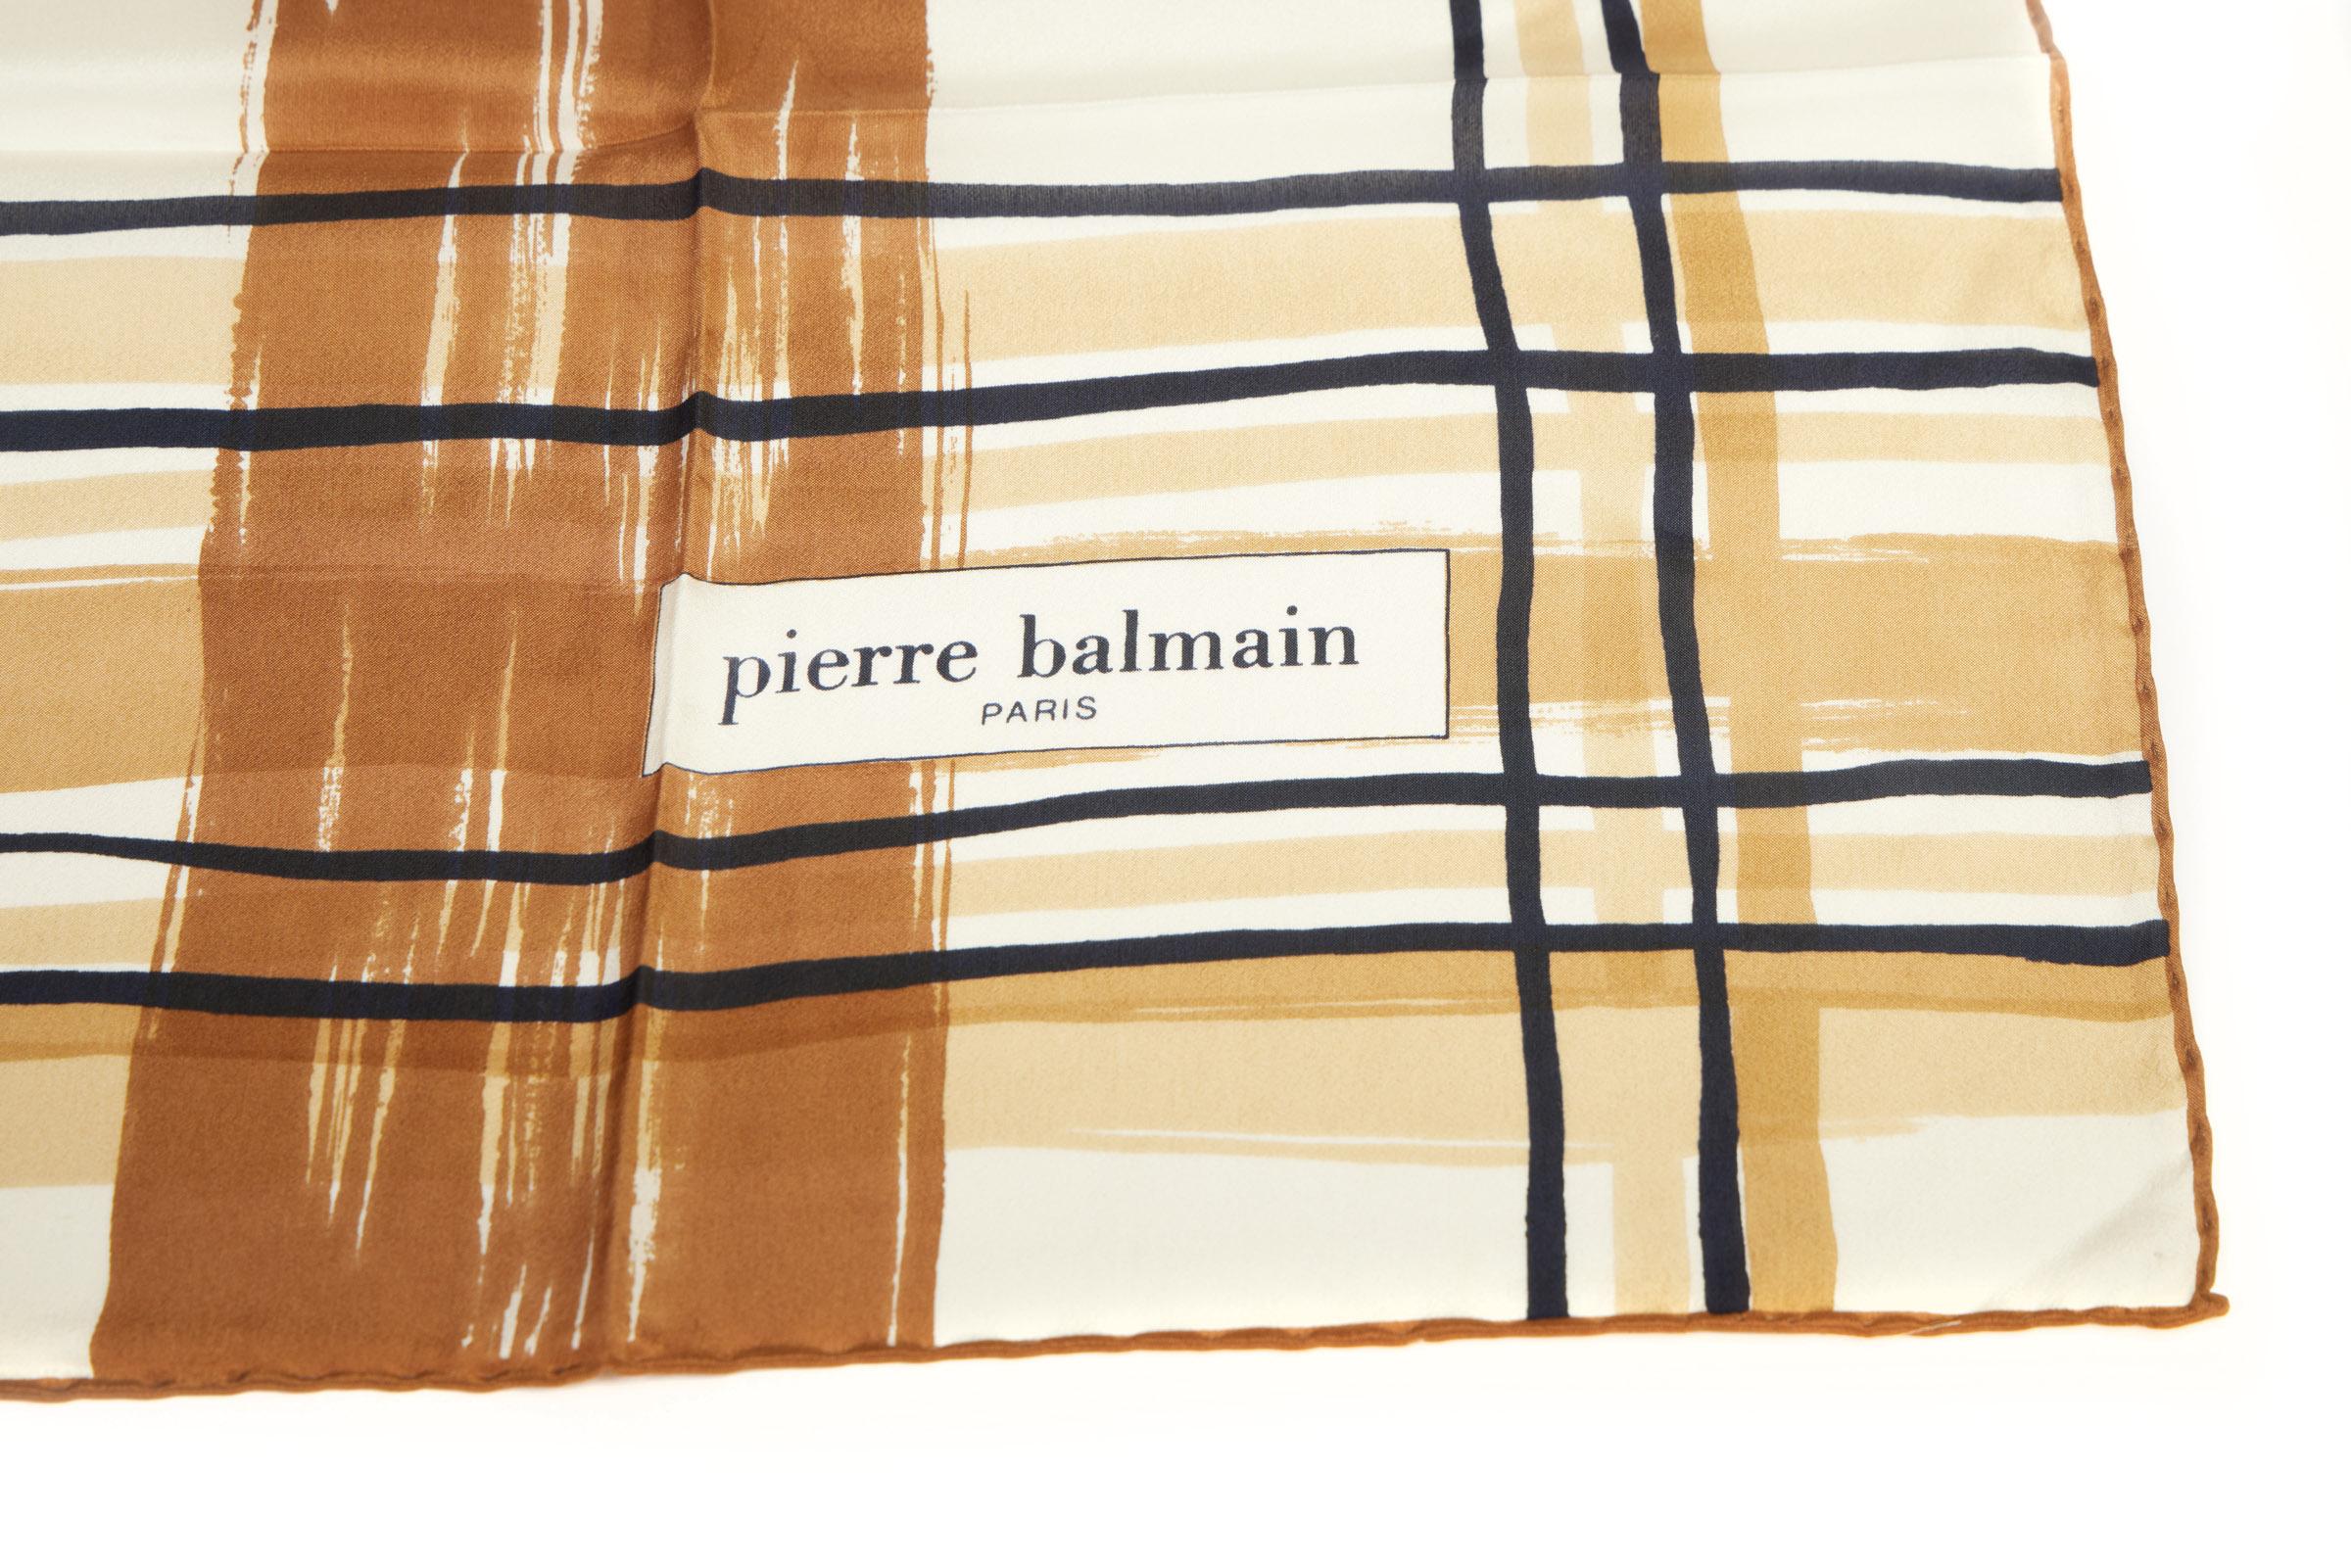 Pierre Balmain Paris vintage silk scarf with geometric design. Hand rolled edges.